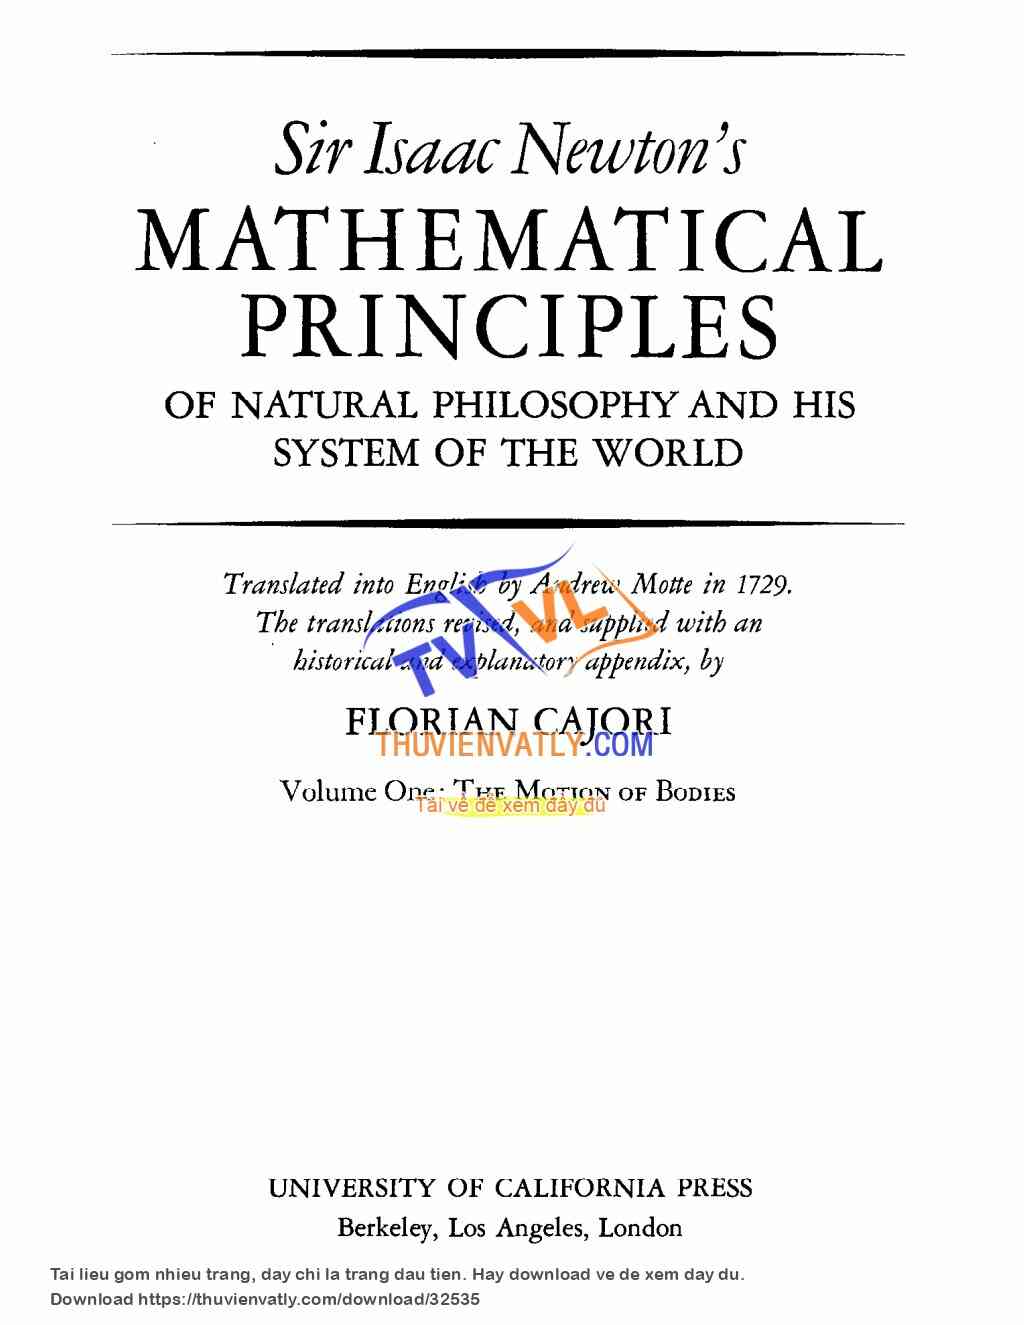 Principia Mathematica - Issac Newton